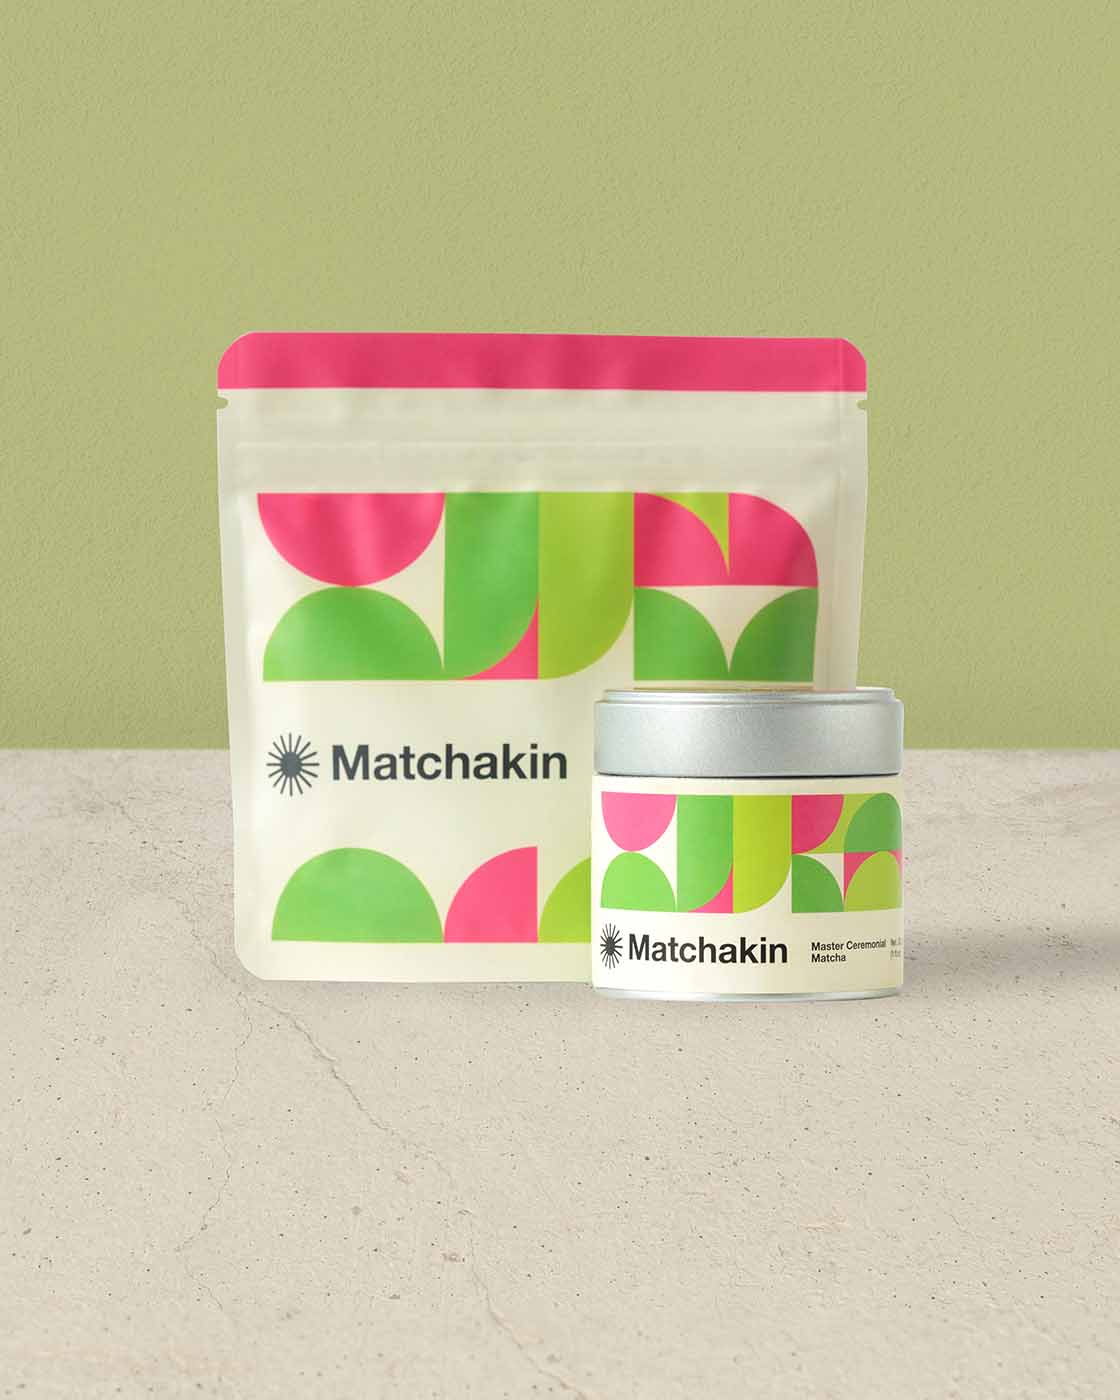 Matchakin 30 grams tin or 50 grams pouch: still the best organic matcha green tea powder